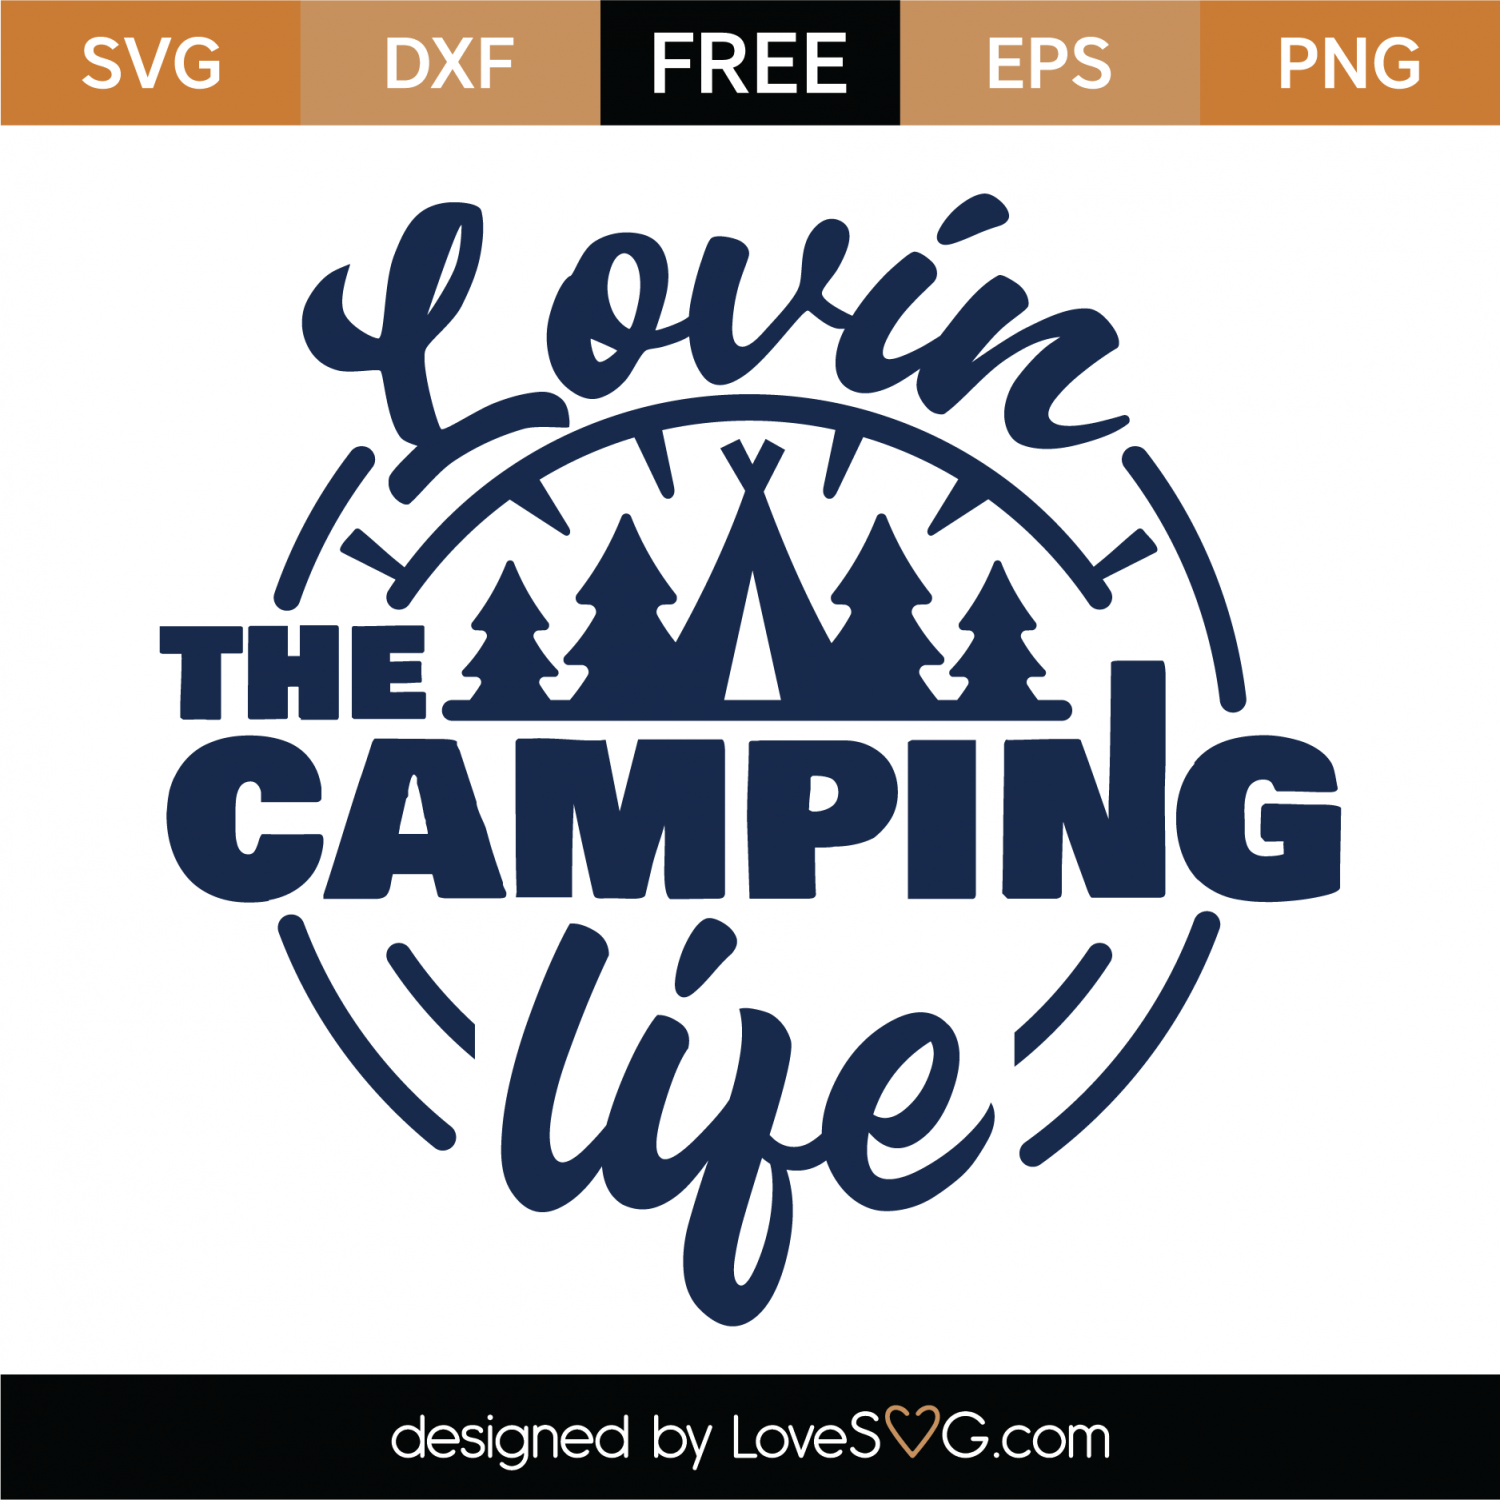 Download Free Lovin The Camping Life SVG Cut File | Lovesvg.com